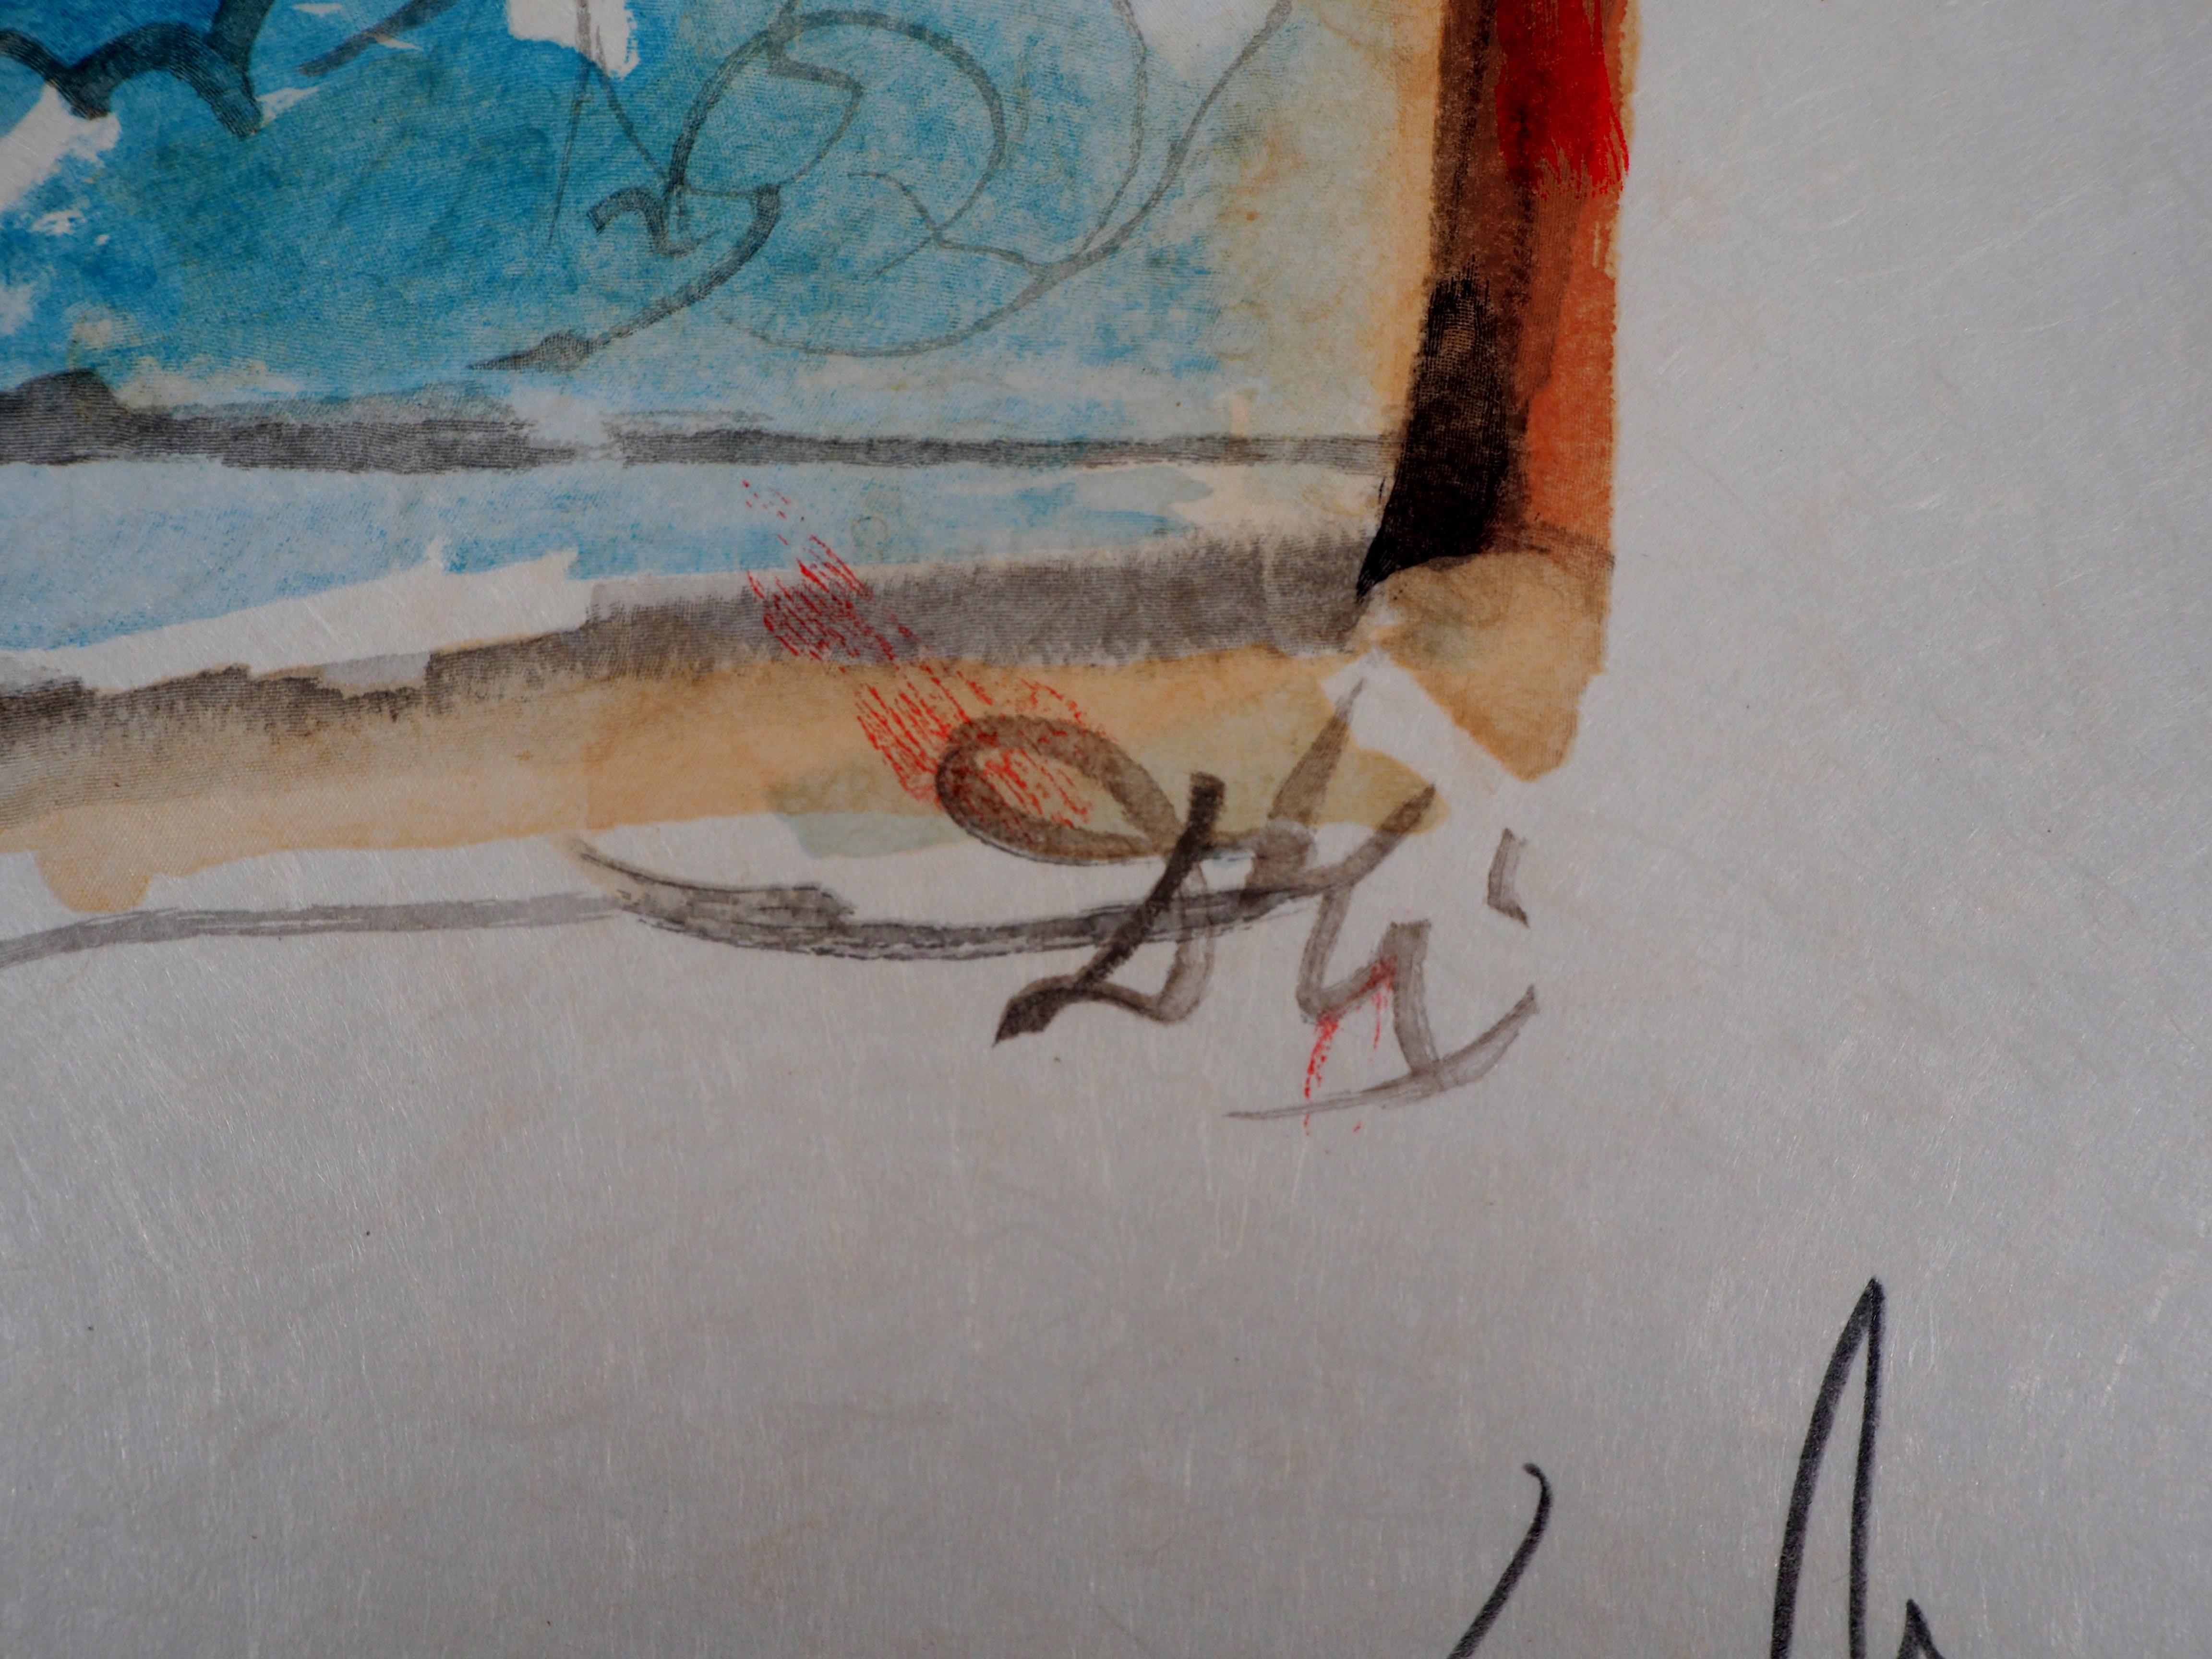  Pegasus (Generous Steed) - Original Woodcut, Handsigned (Field #79-2 J) - Surrealist Print by Salvador Dalí